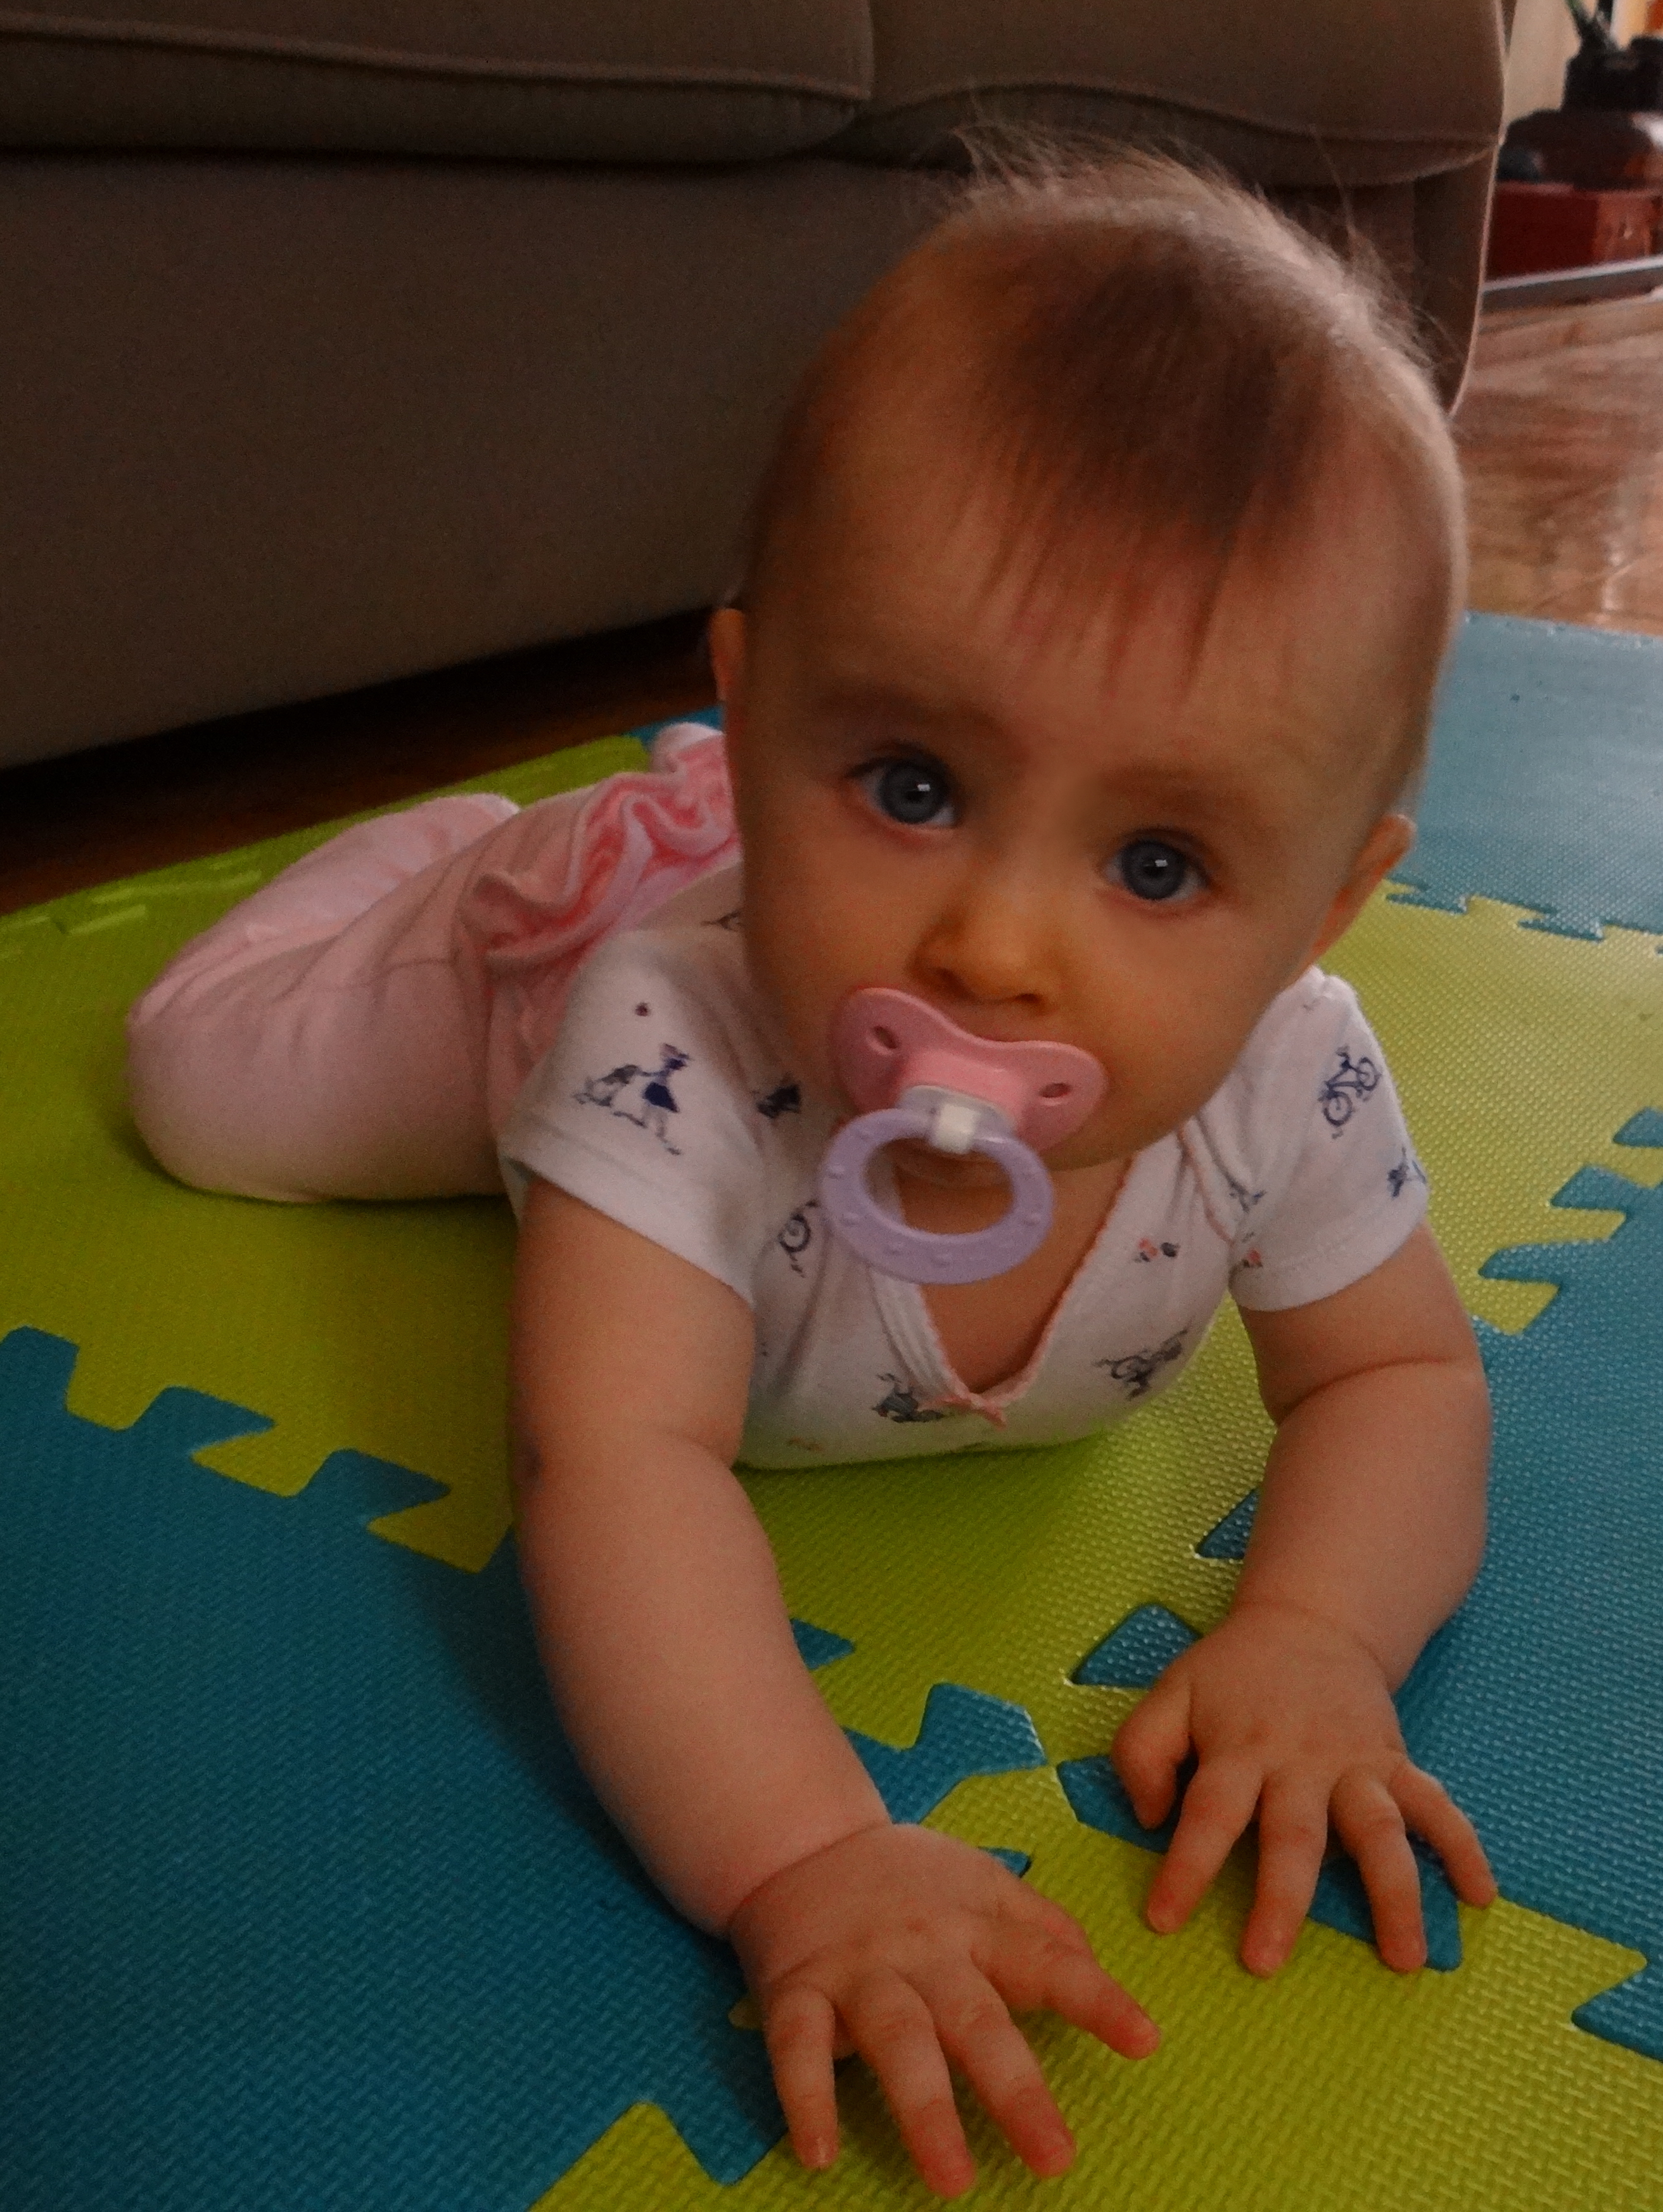 Baby learning to crawl on tummy